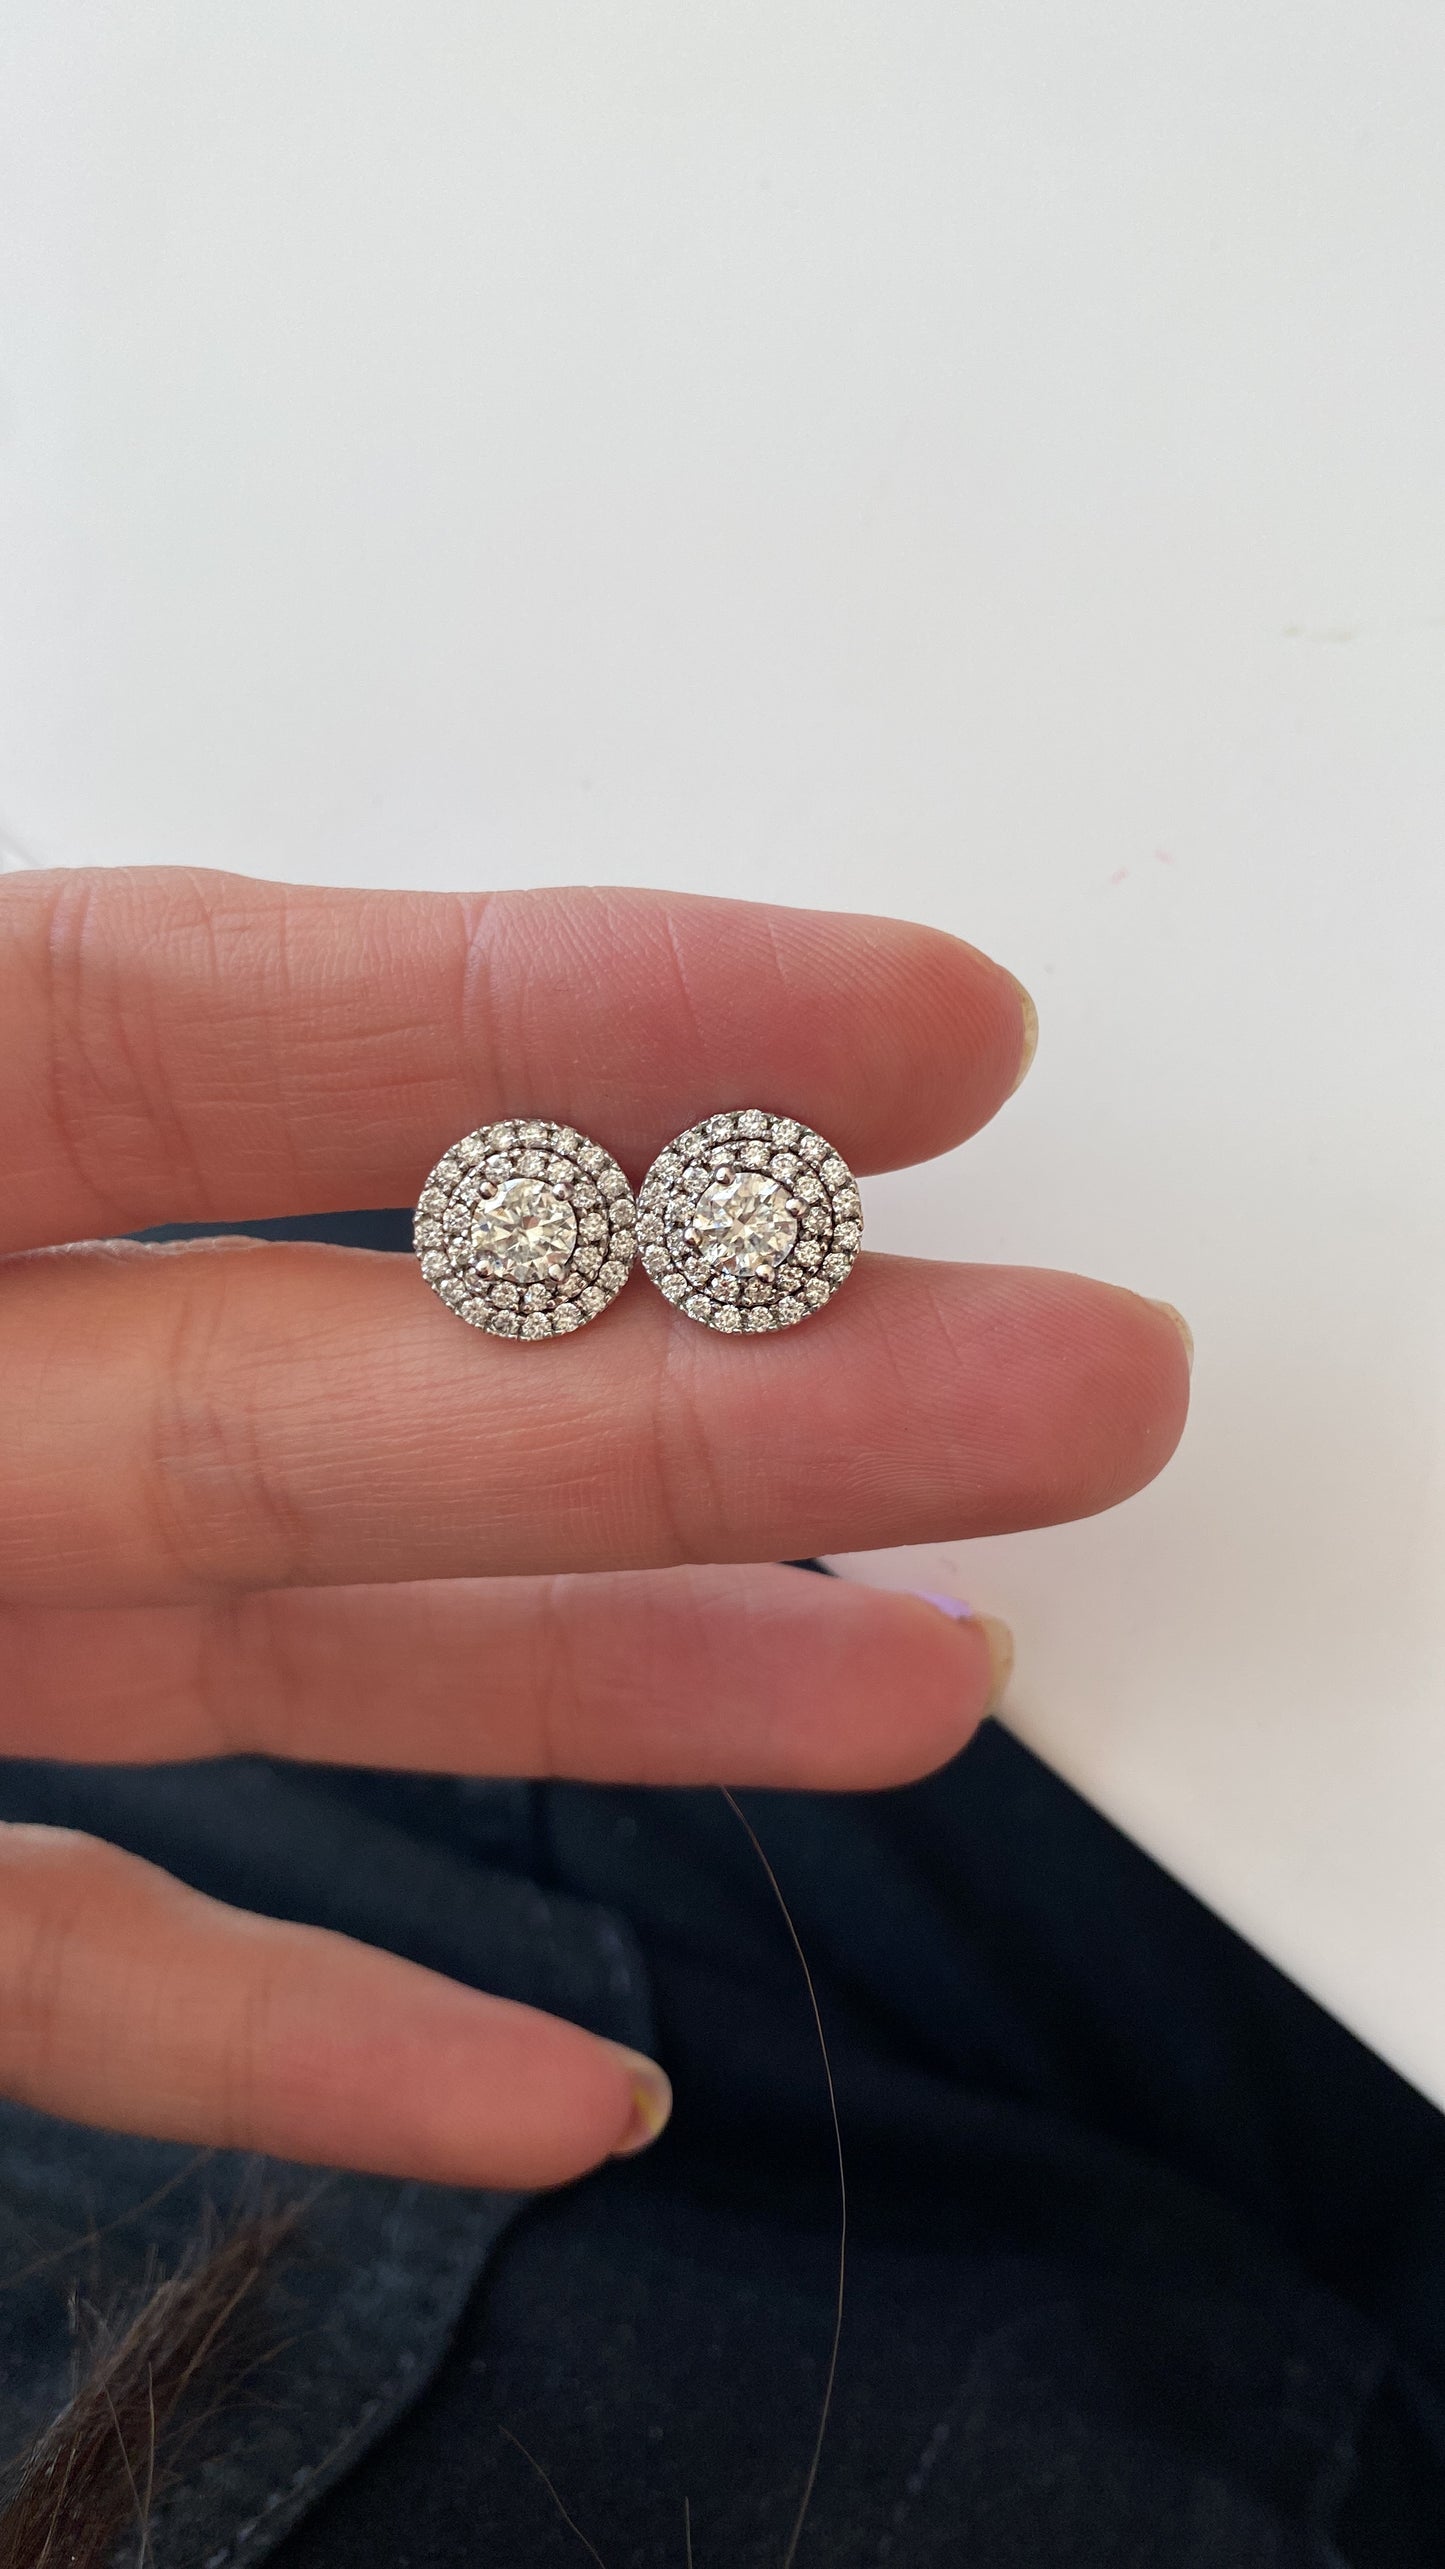 SINGLE PIECE / Double halo diamond earrings